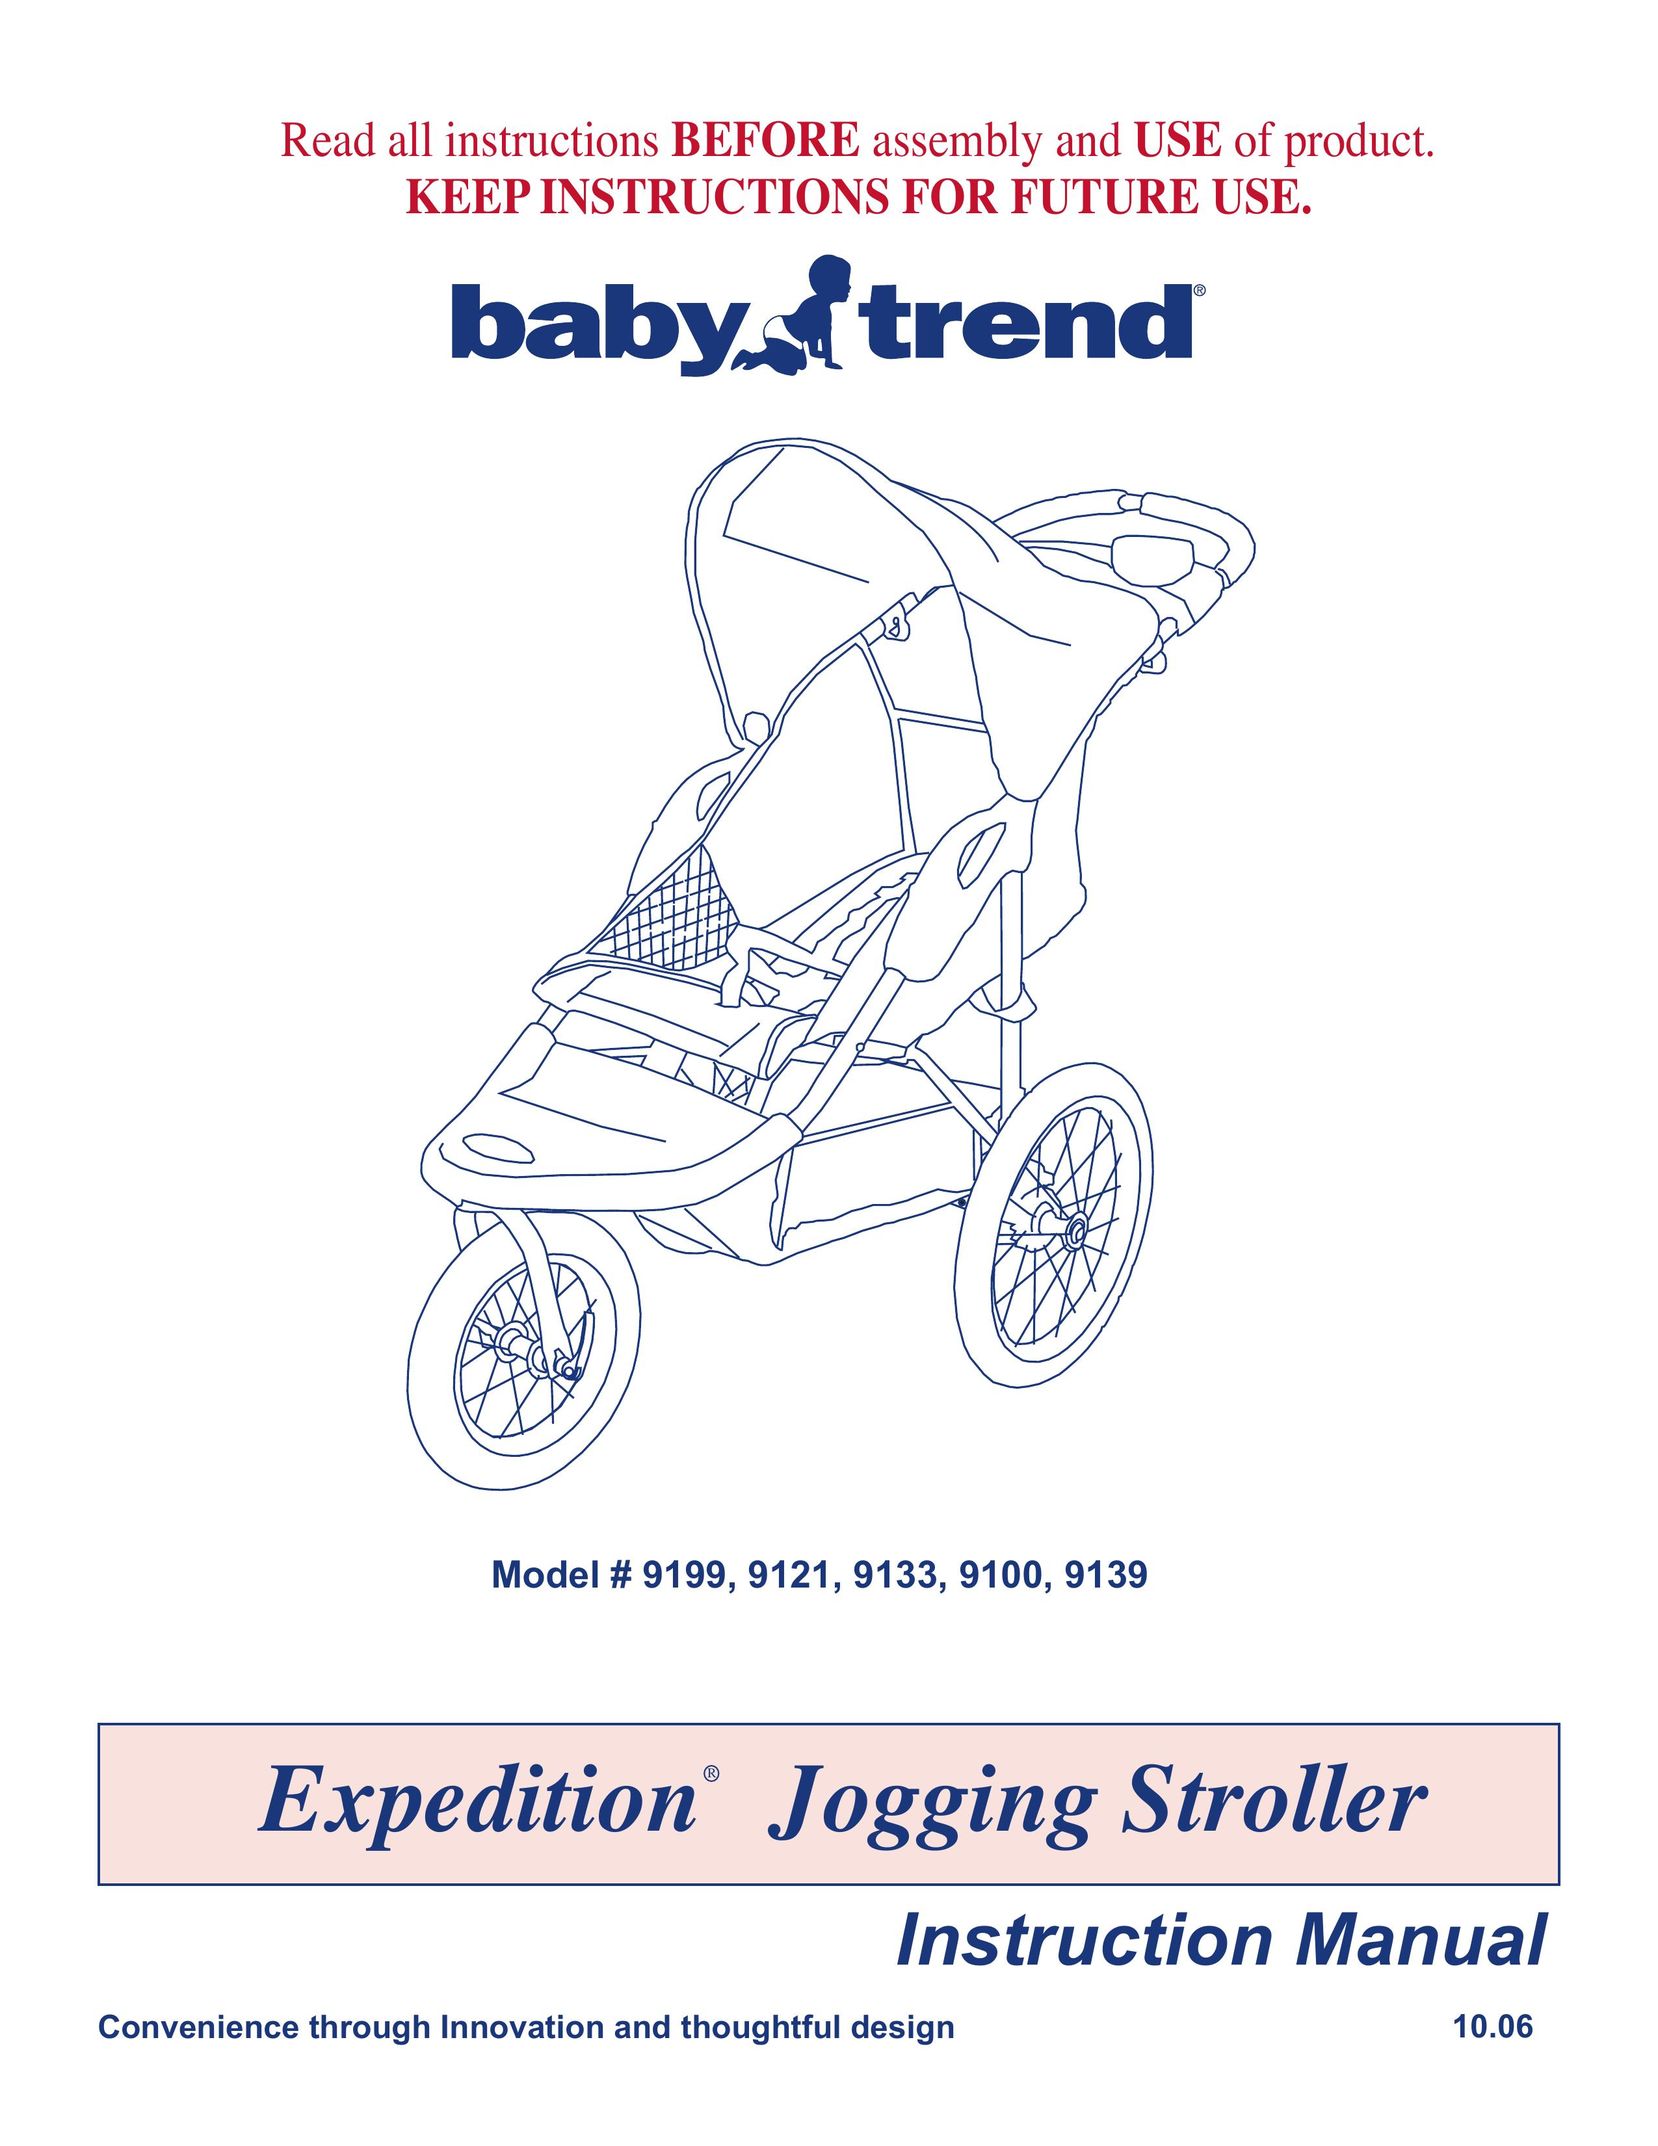 Baby Trend 9139 Stroller User Manual